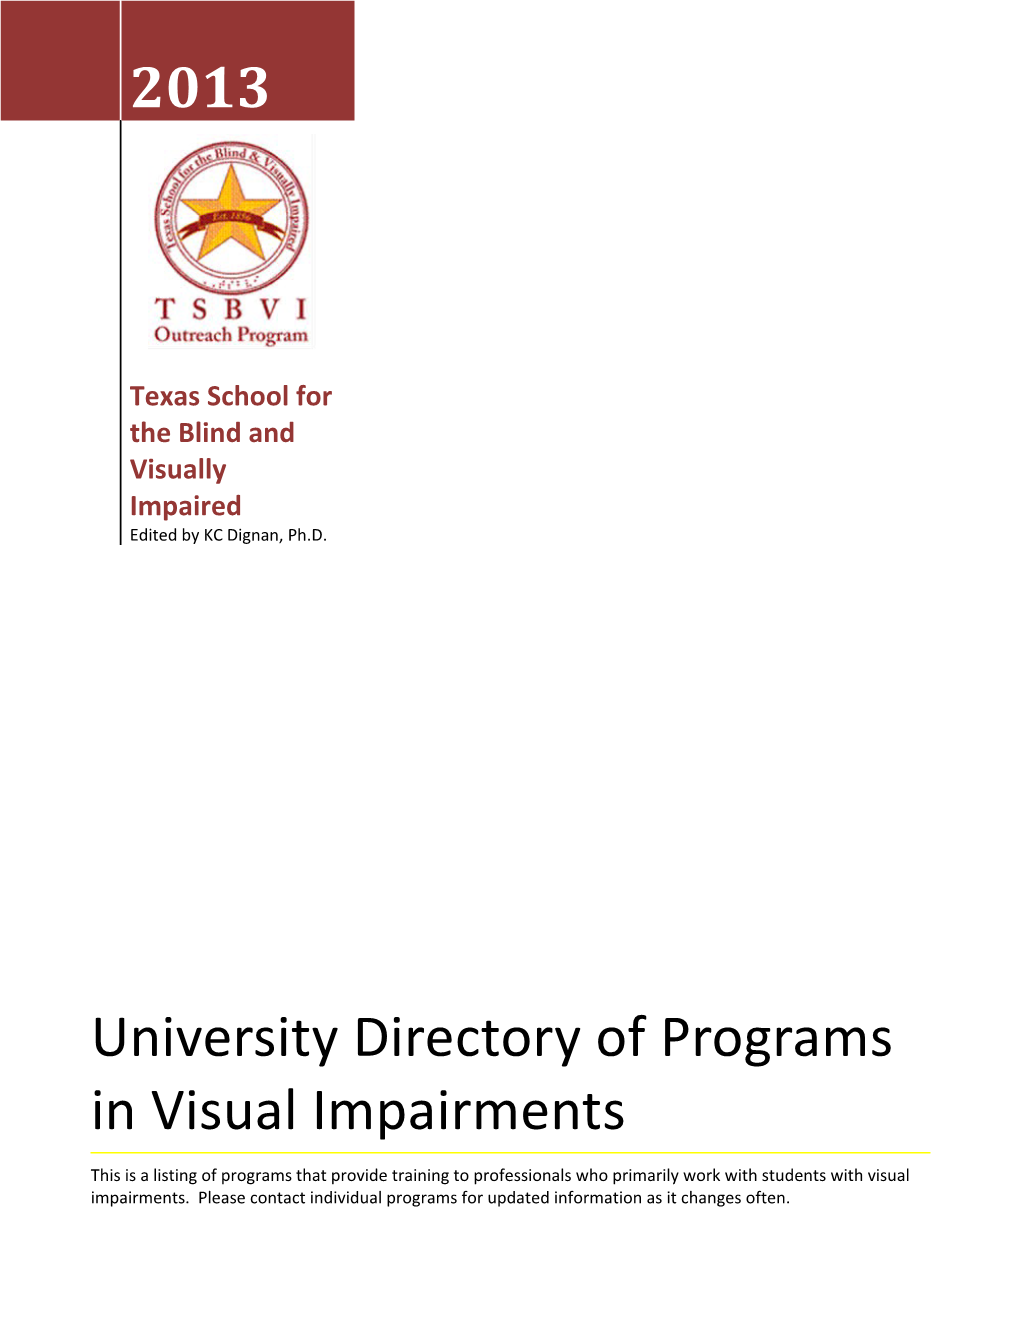 Directory of University Programs in Visual Impairments